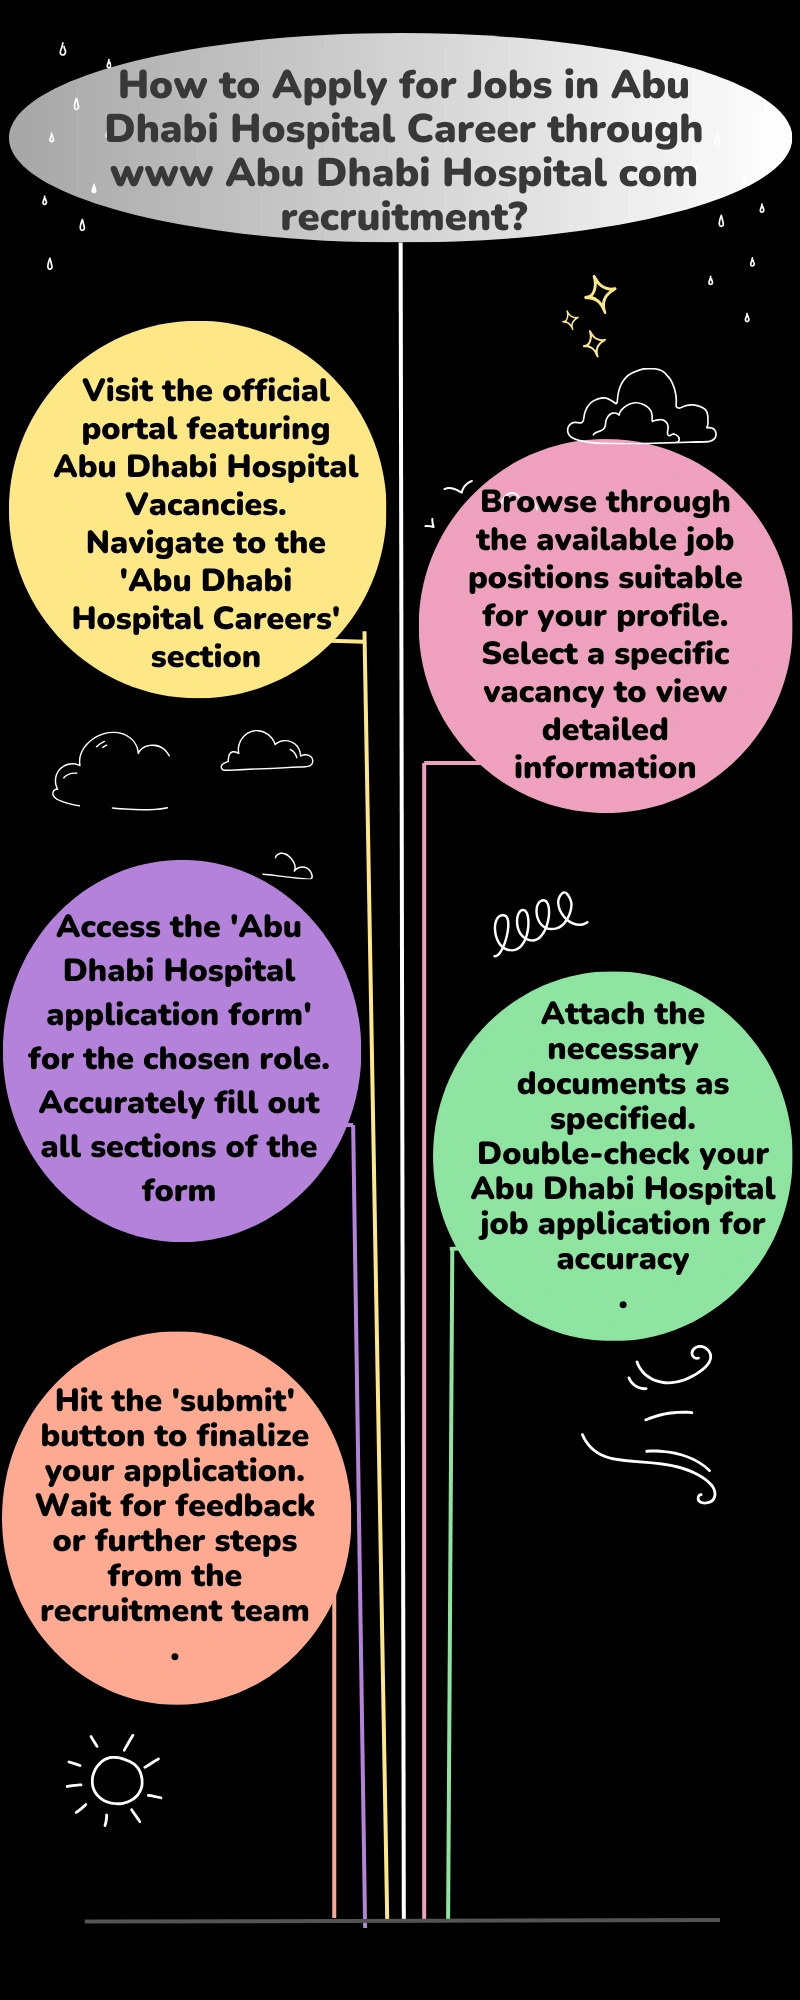 How to Apply for Jobs in Abu Dhabi Hospital Career through www Abu Dhabi Hospital com recruitment?